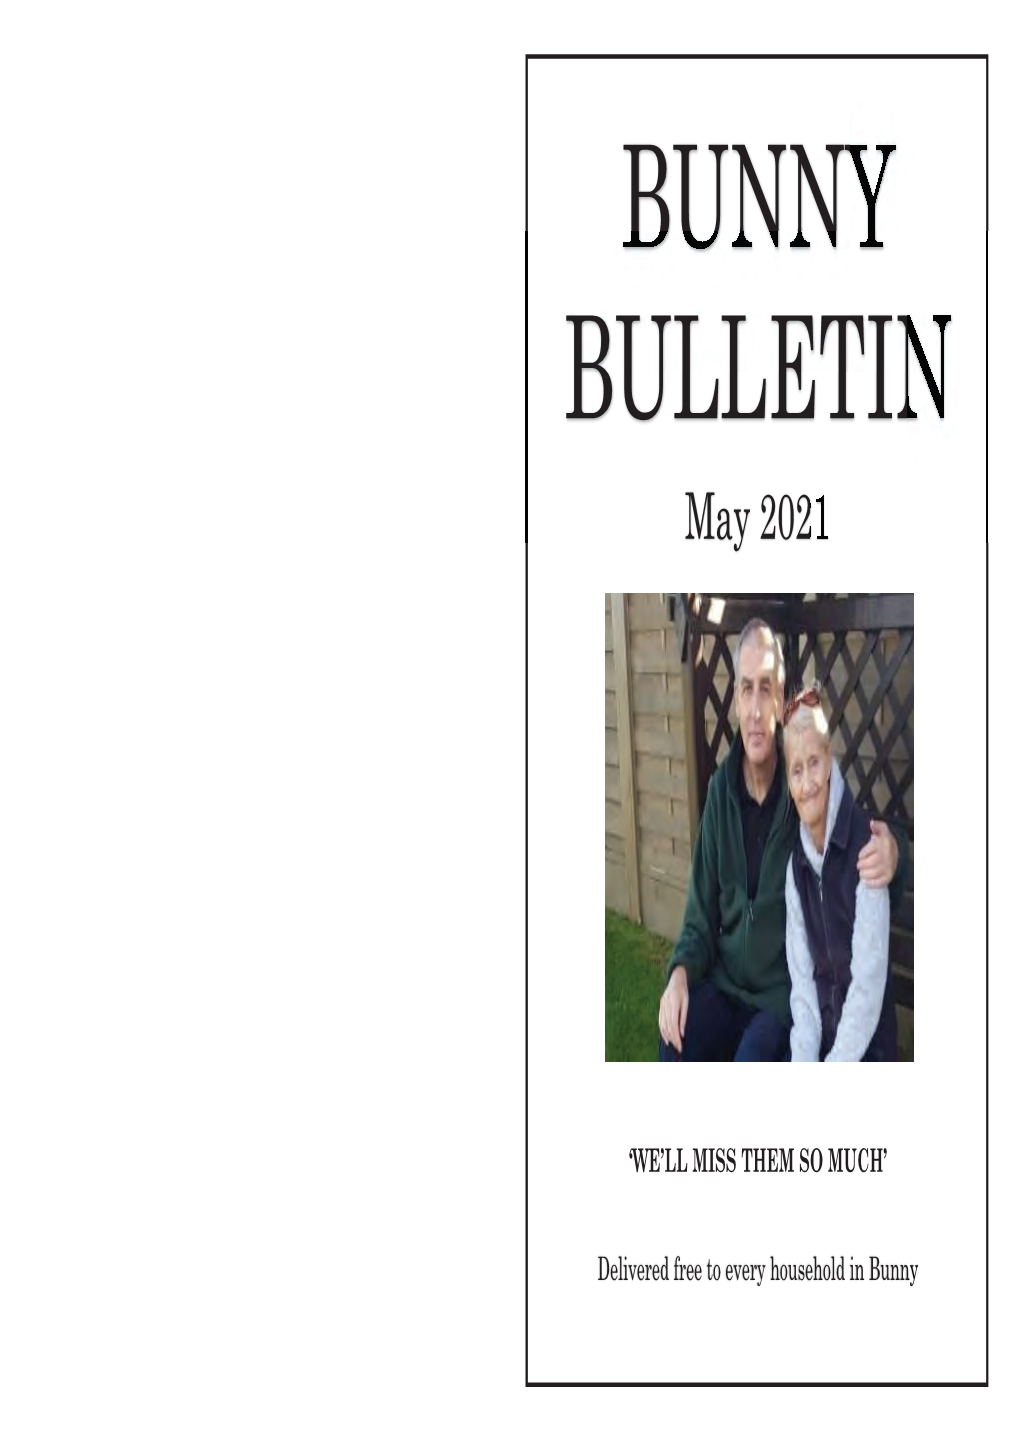 BUNNY BULLETIN May 2021